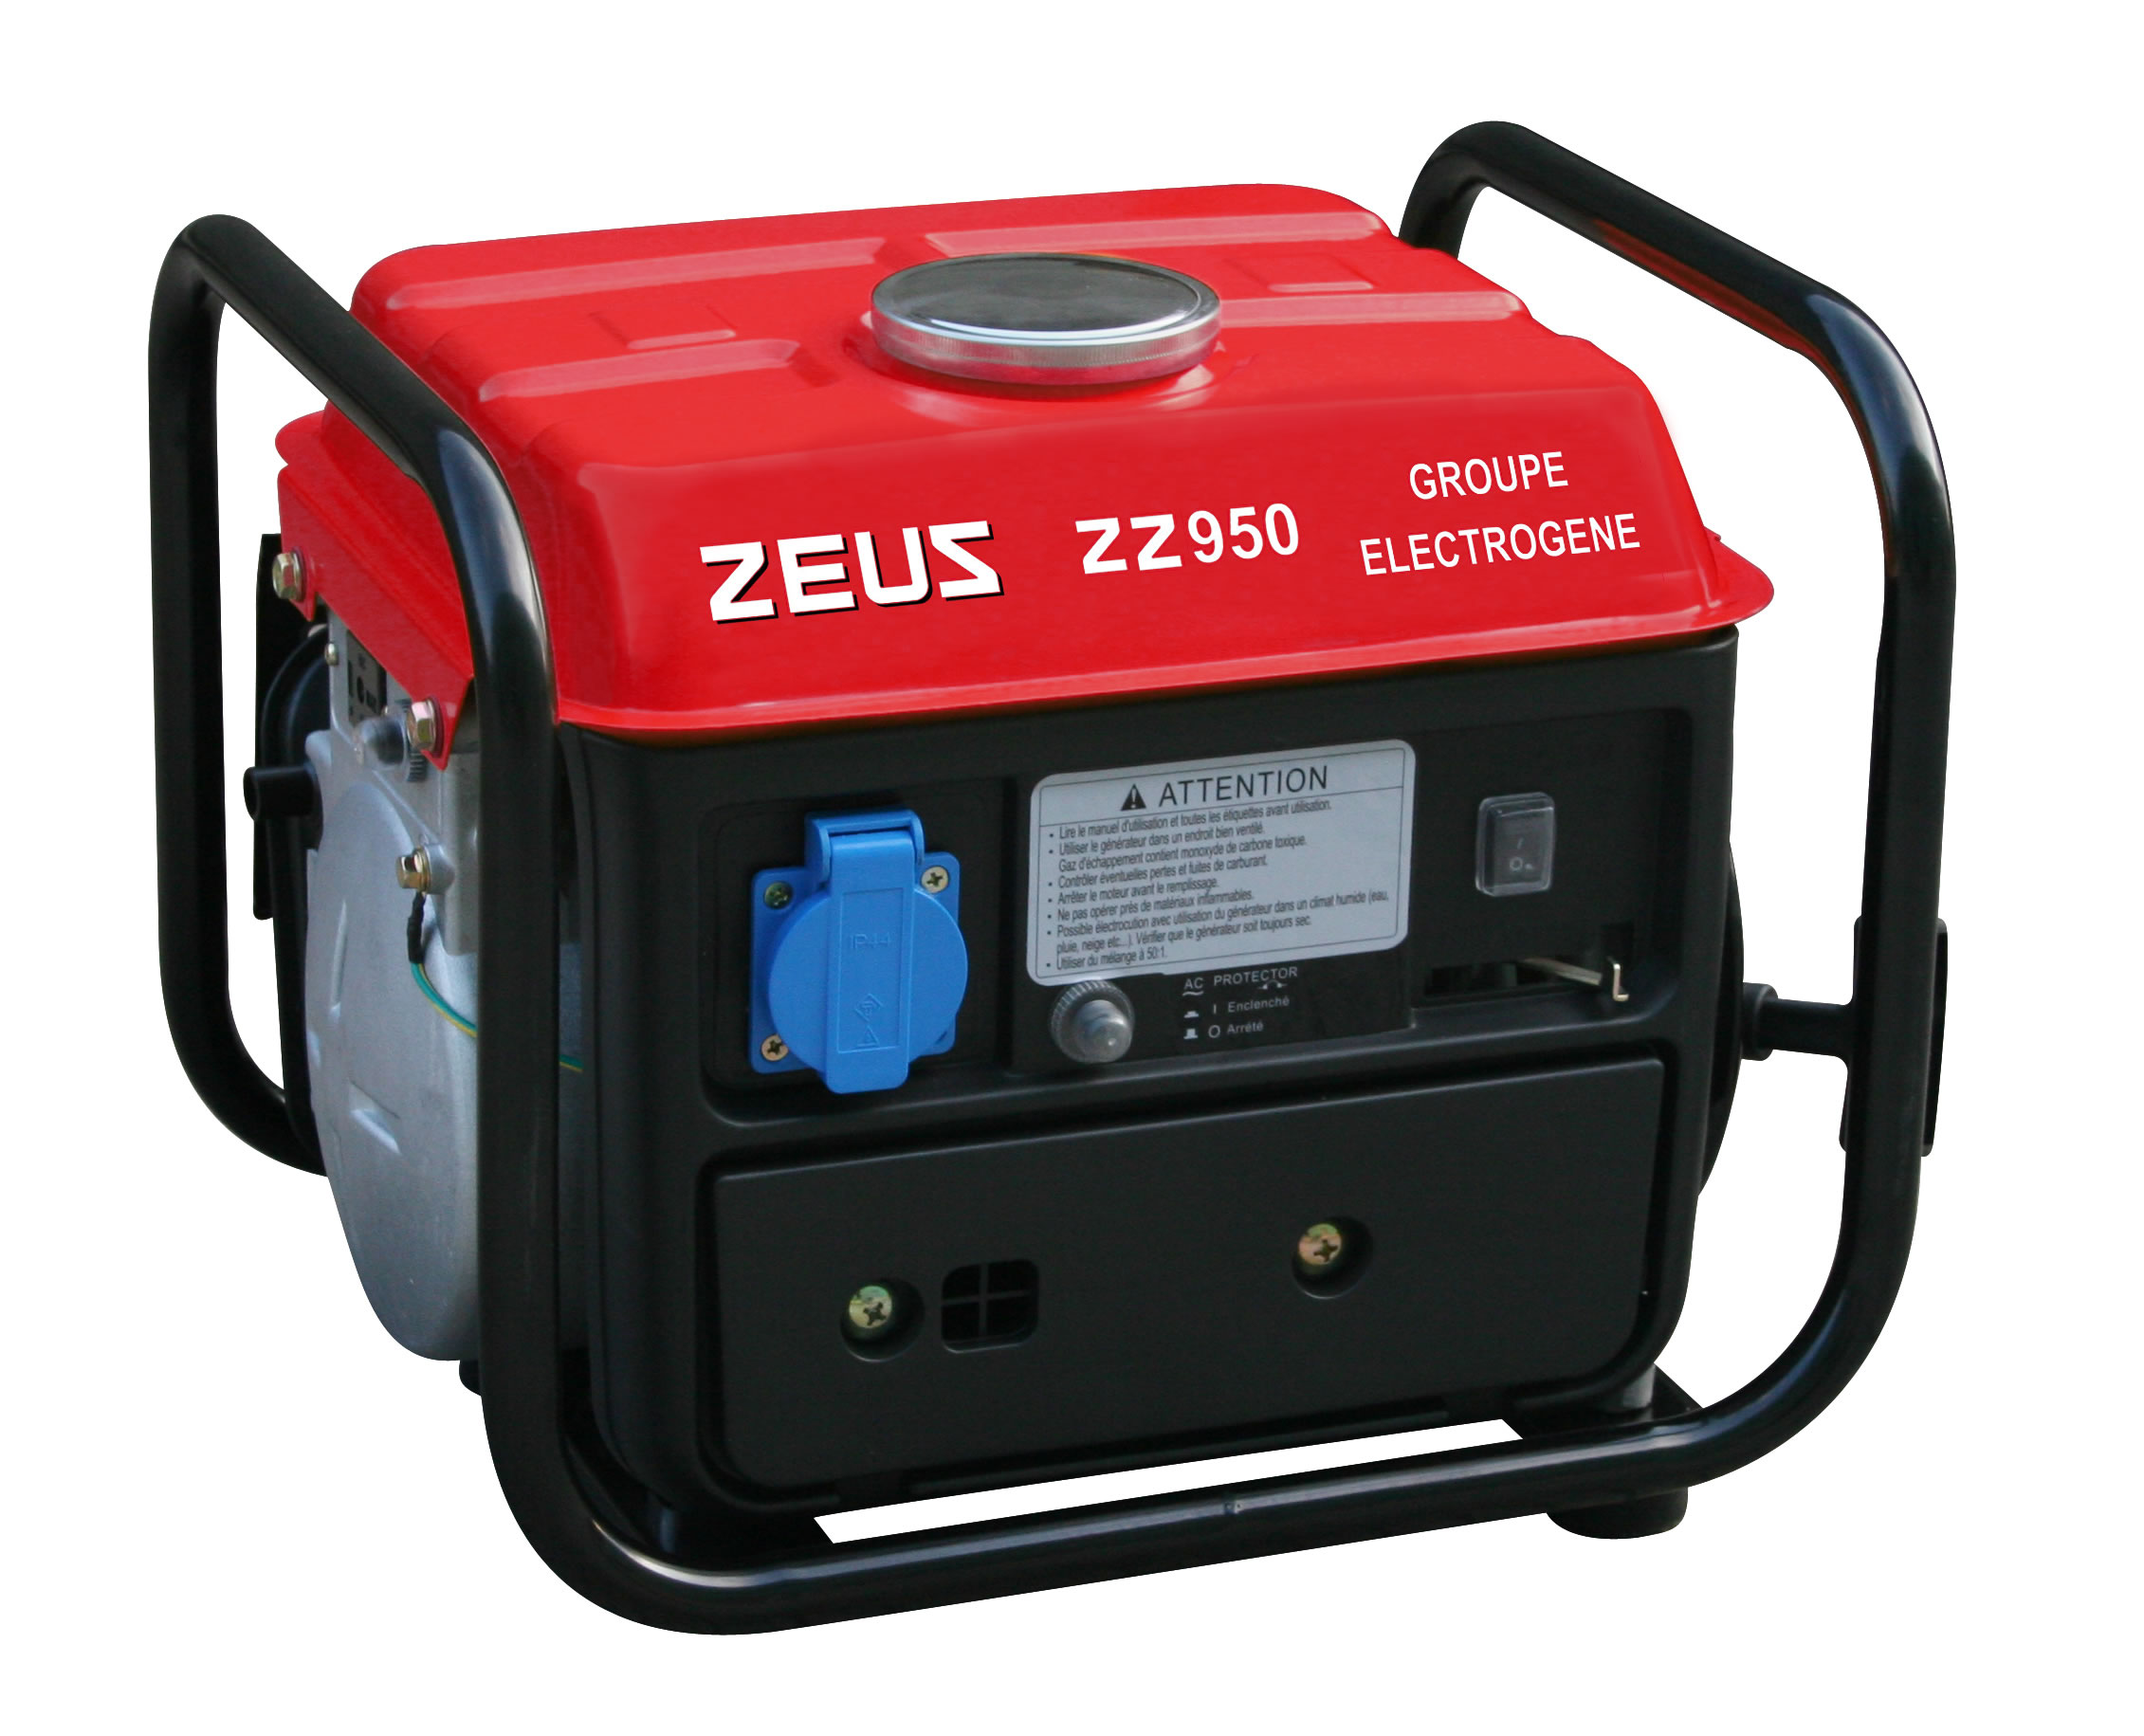 Groupe électrogène ZZ950 720W - ZEUS